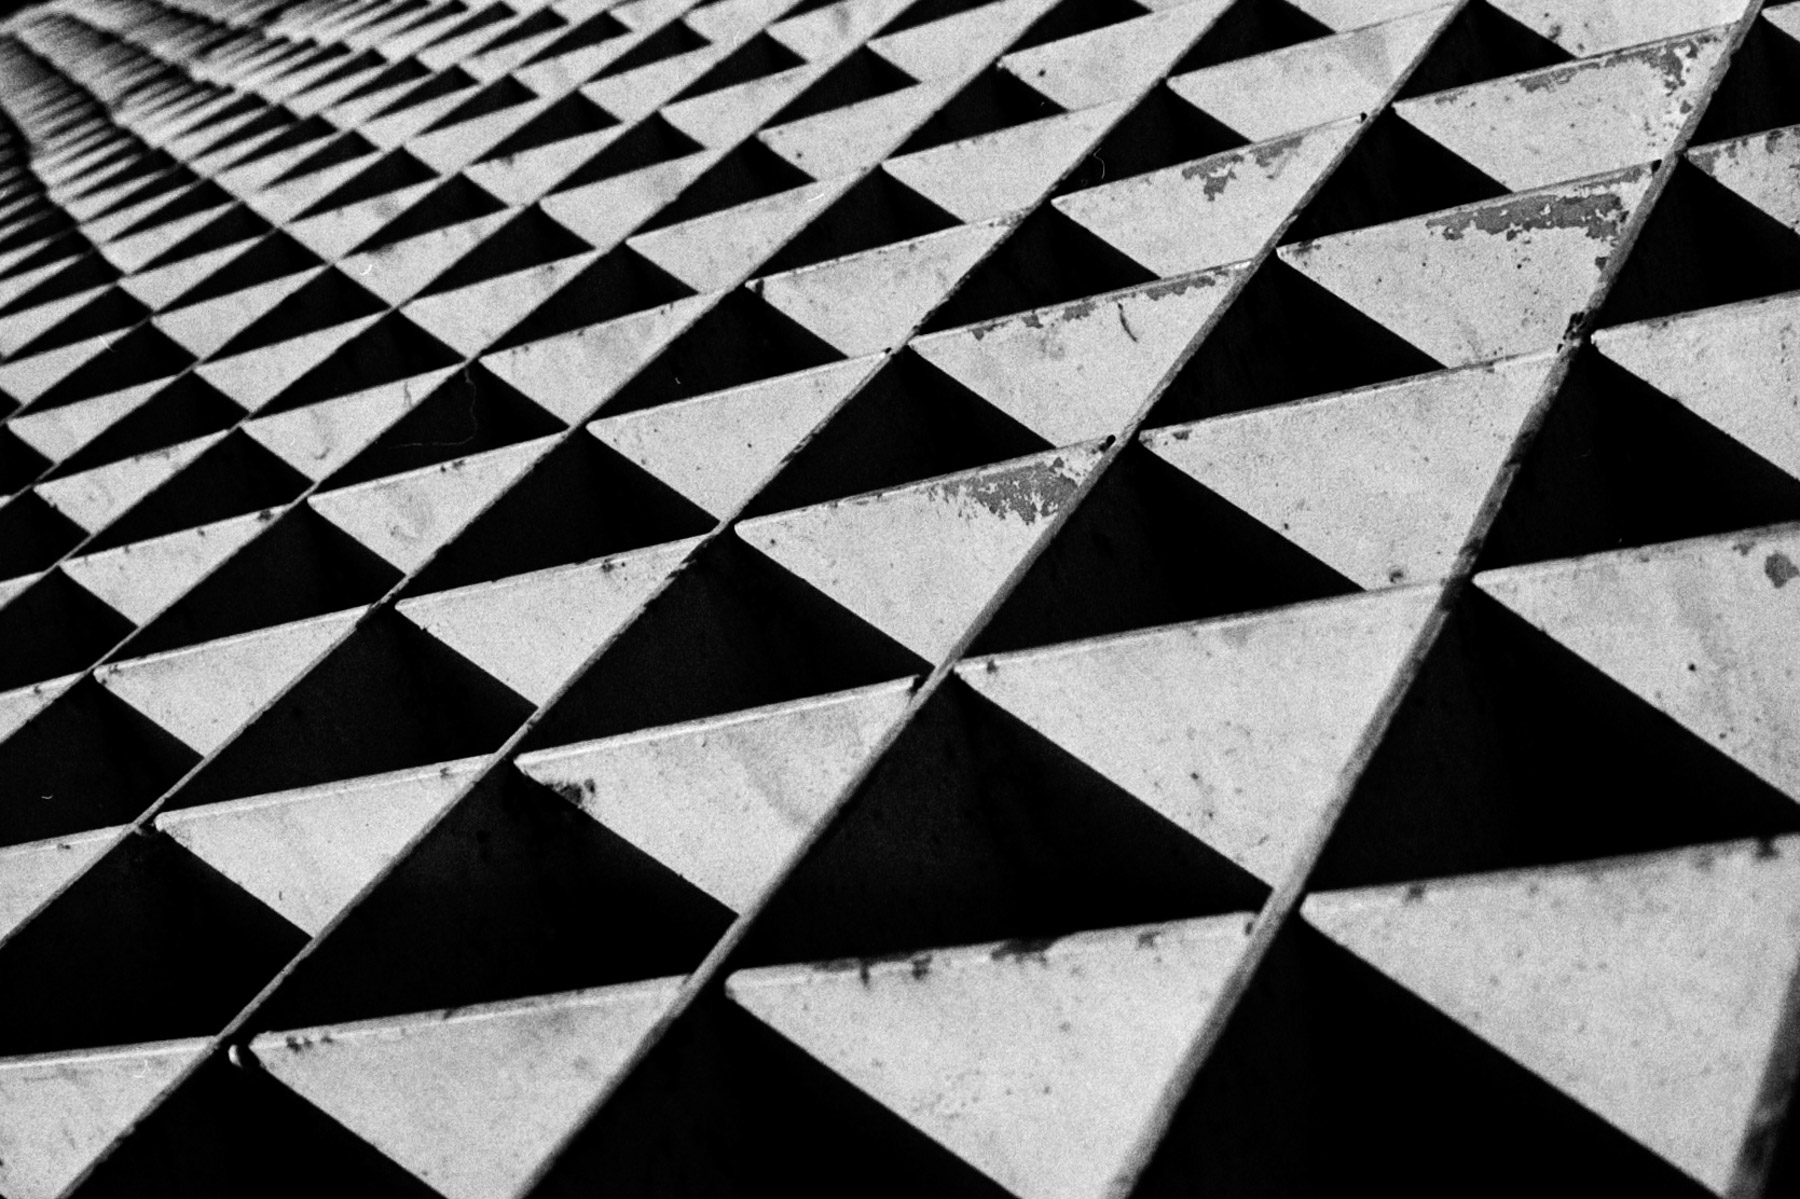  Efrain Bojorquez |&nbsp;About squares and triangles |&nbsp;Asahi Pentax Spotmatic |&nbsp;Kodak TriX 400 